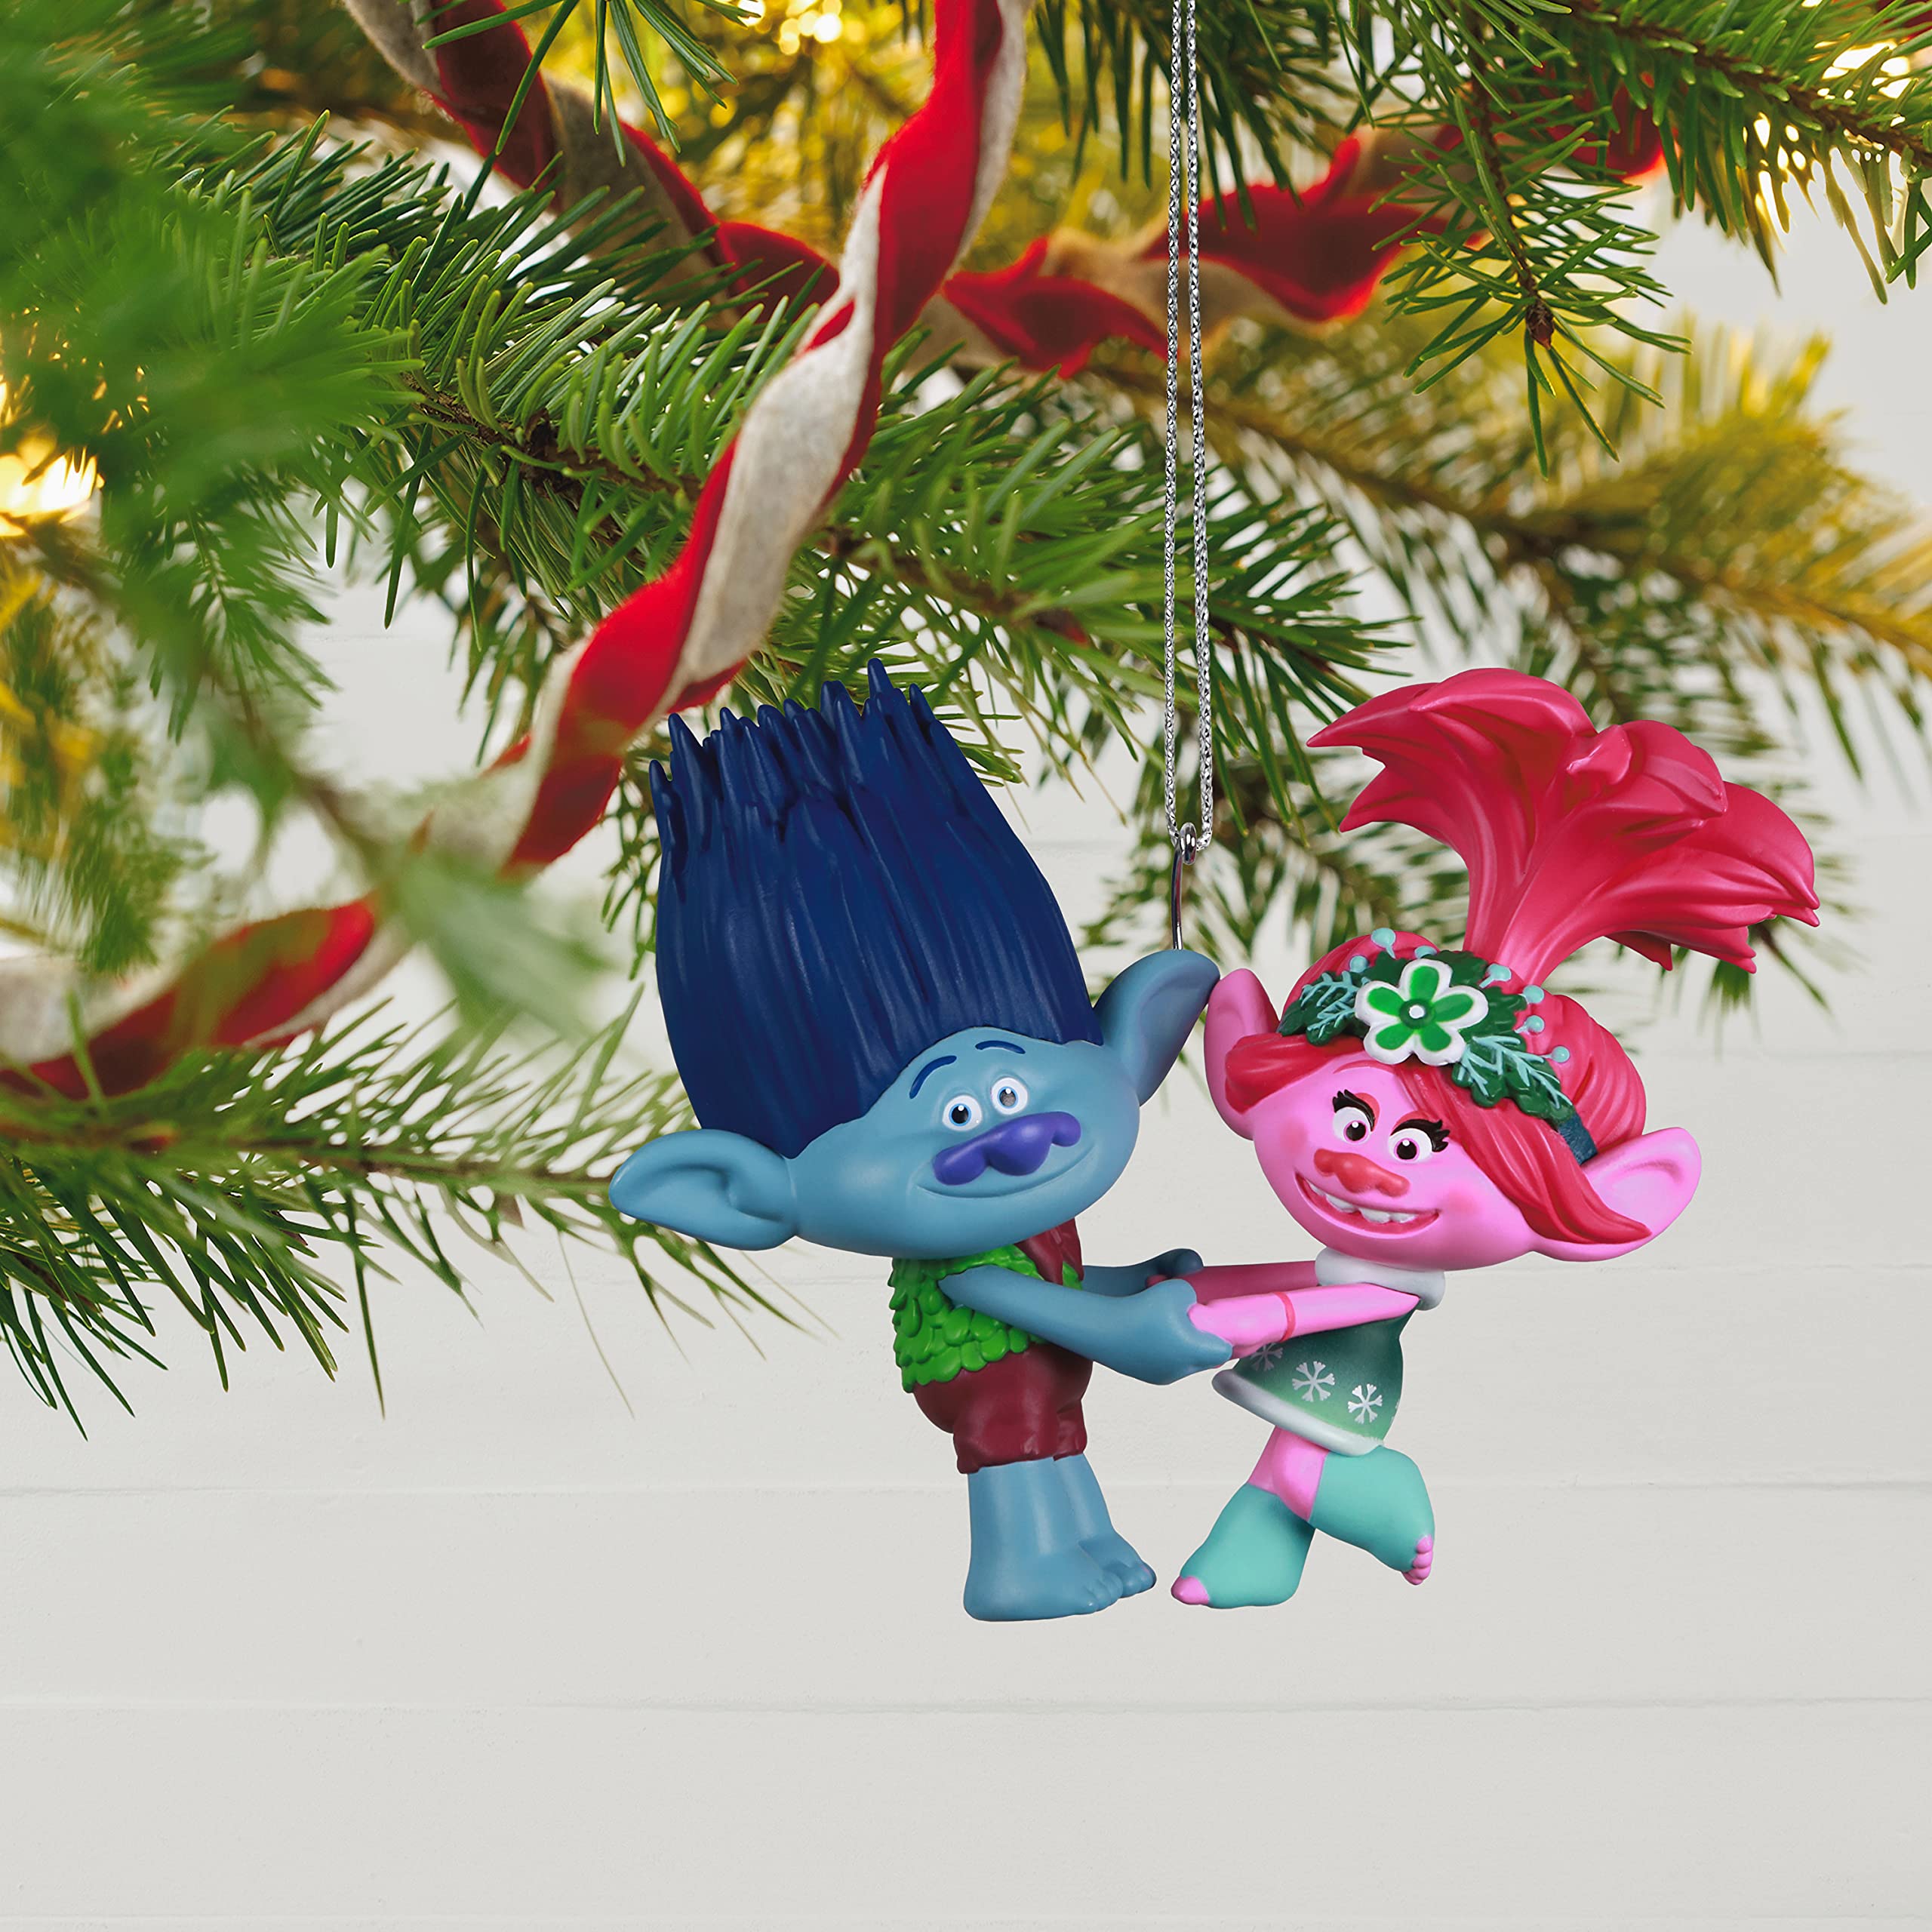 Trolls Holiday in Harmony Hallmark Keepsake Christmas Ornament 2021